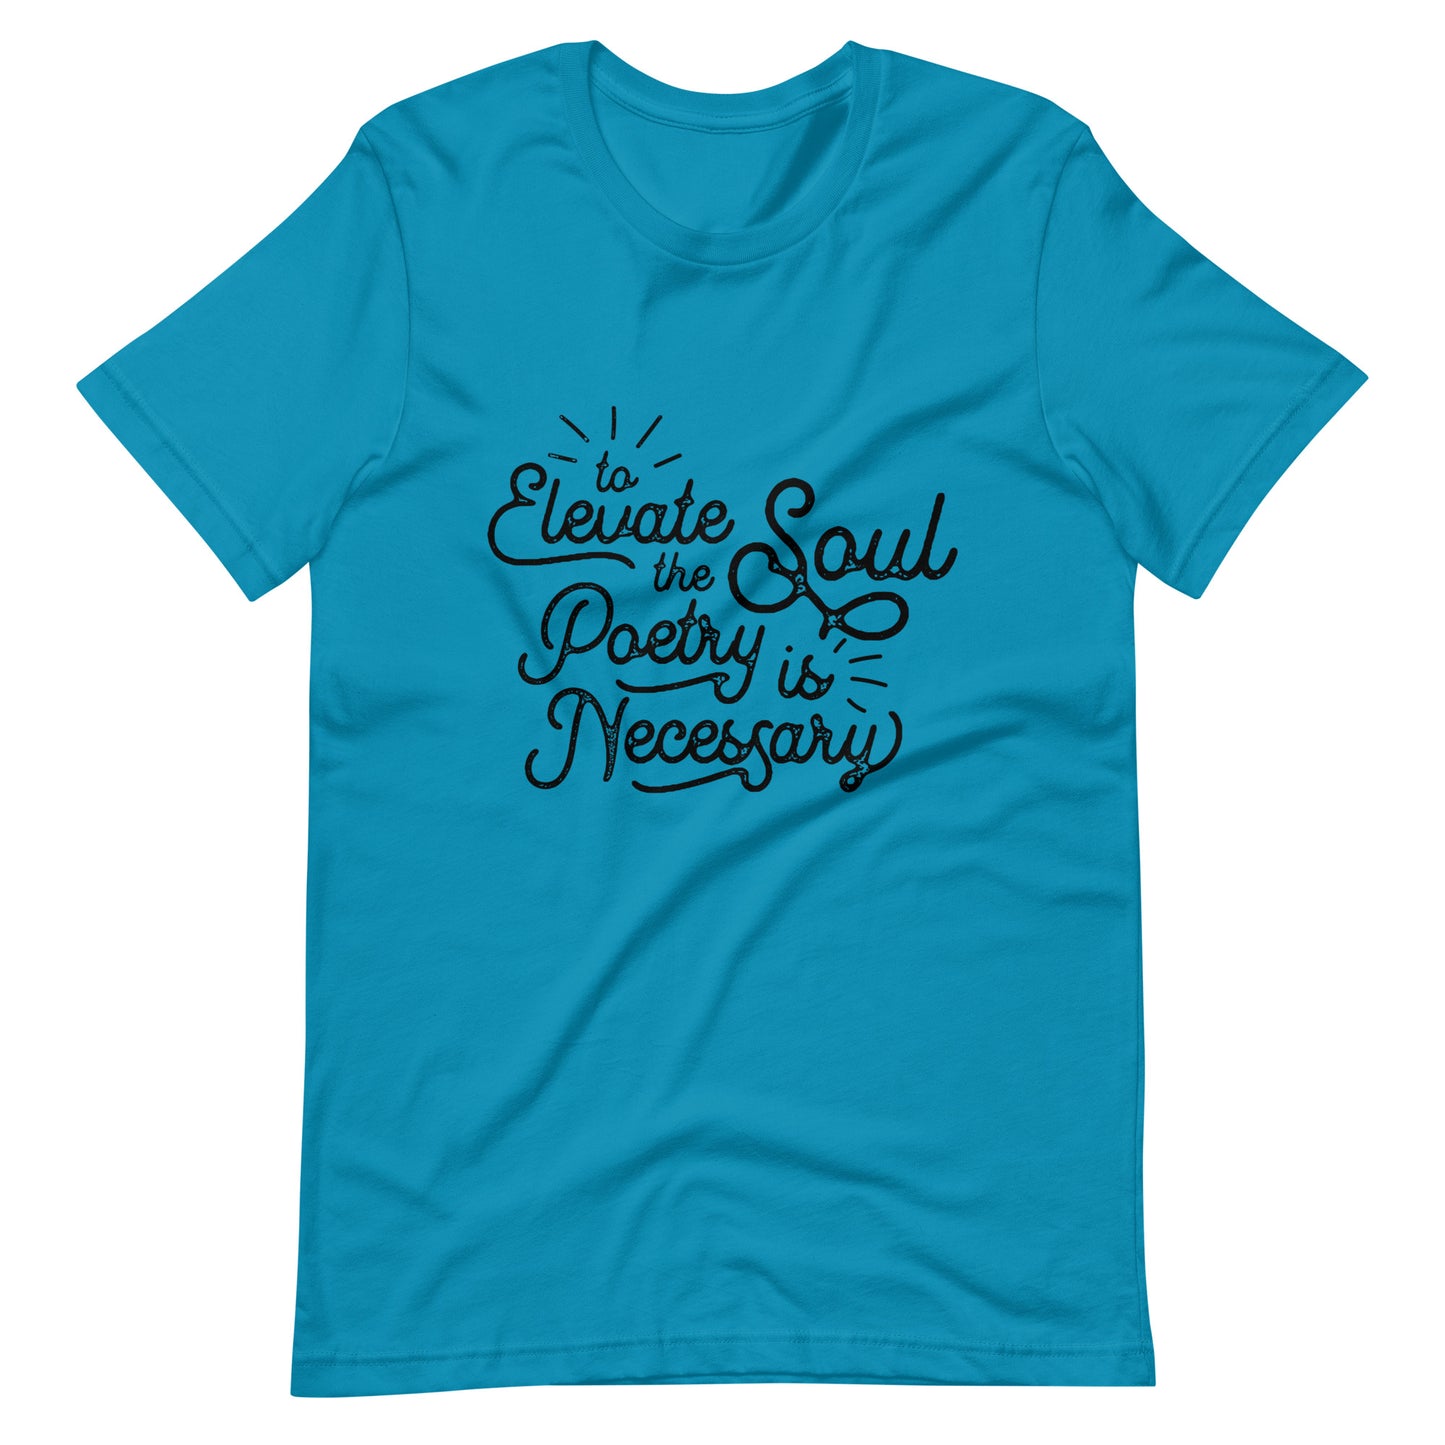 To Elevate the Soul Edgar Allan Poe Quote - Men's t-shirt - Aqua Front